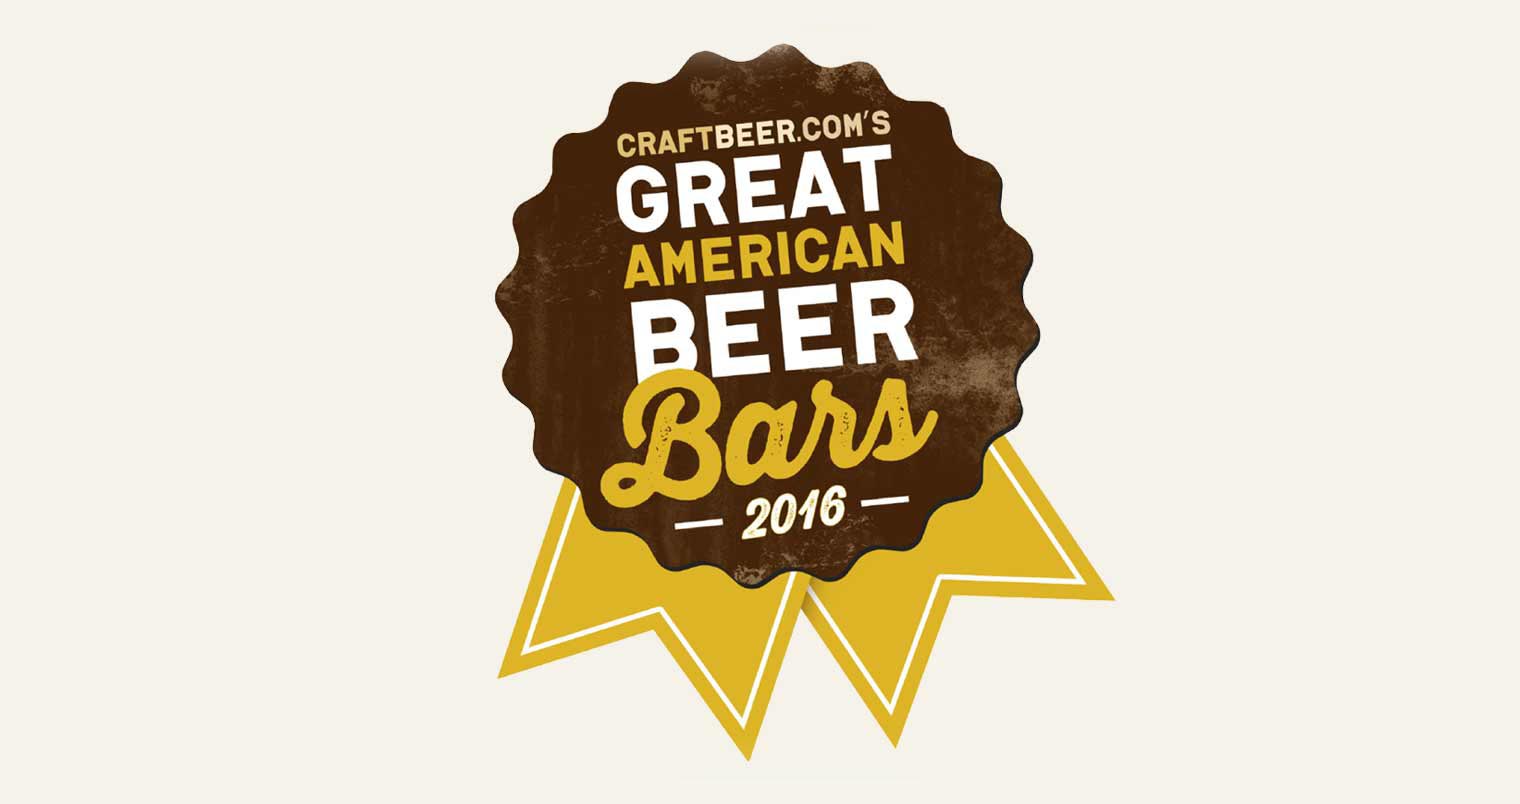 51 Best Beer Bars in America Announced, beer news, featured image